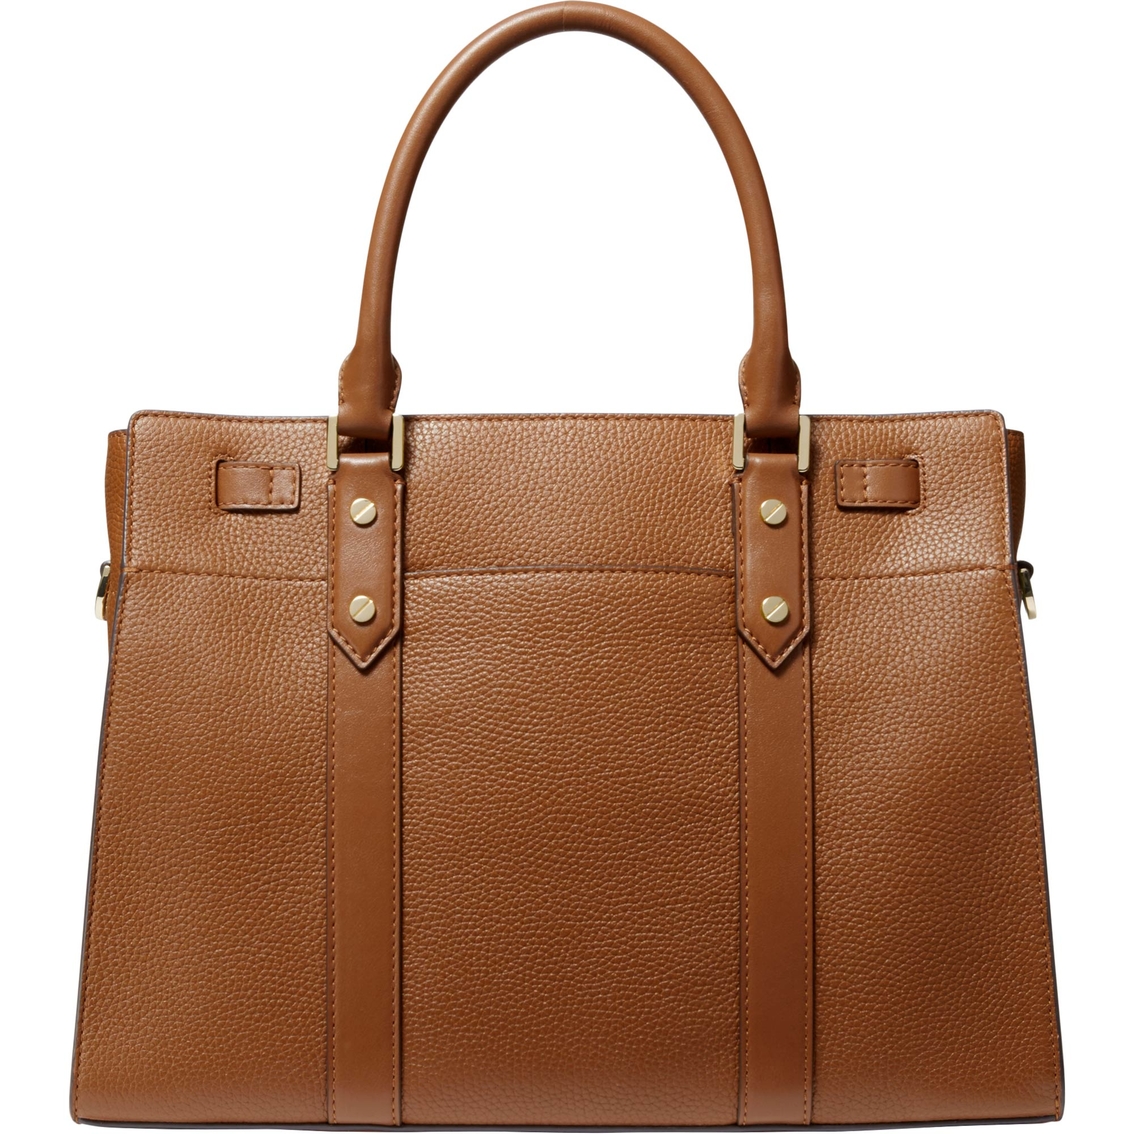 Michael Kors Hamilton Large Leather Satchel Handbag - Image 2 of 5